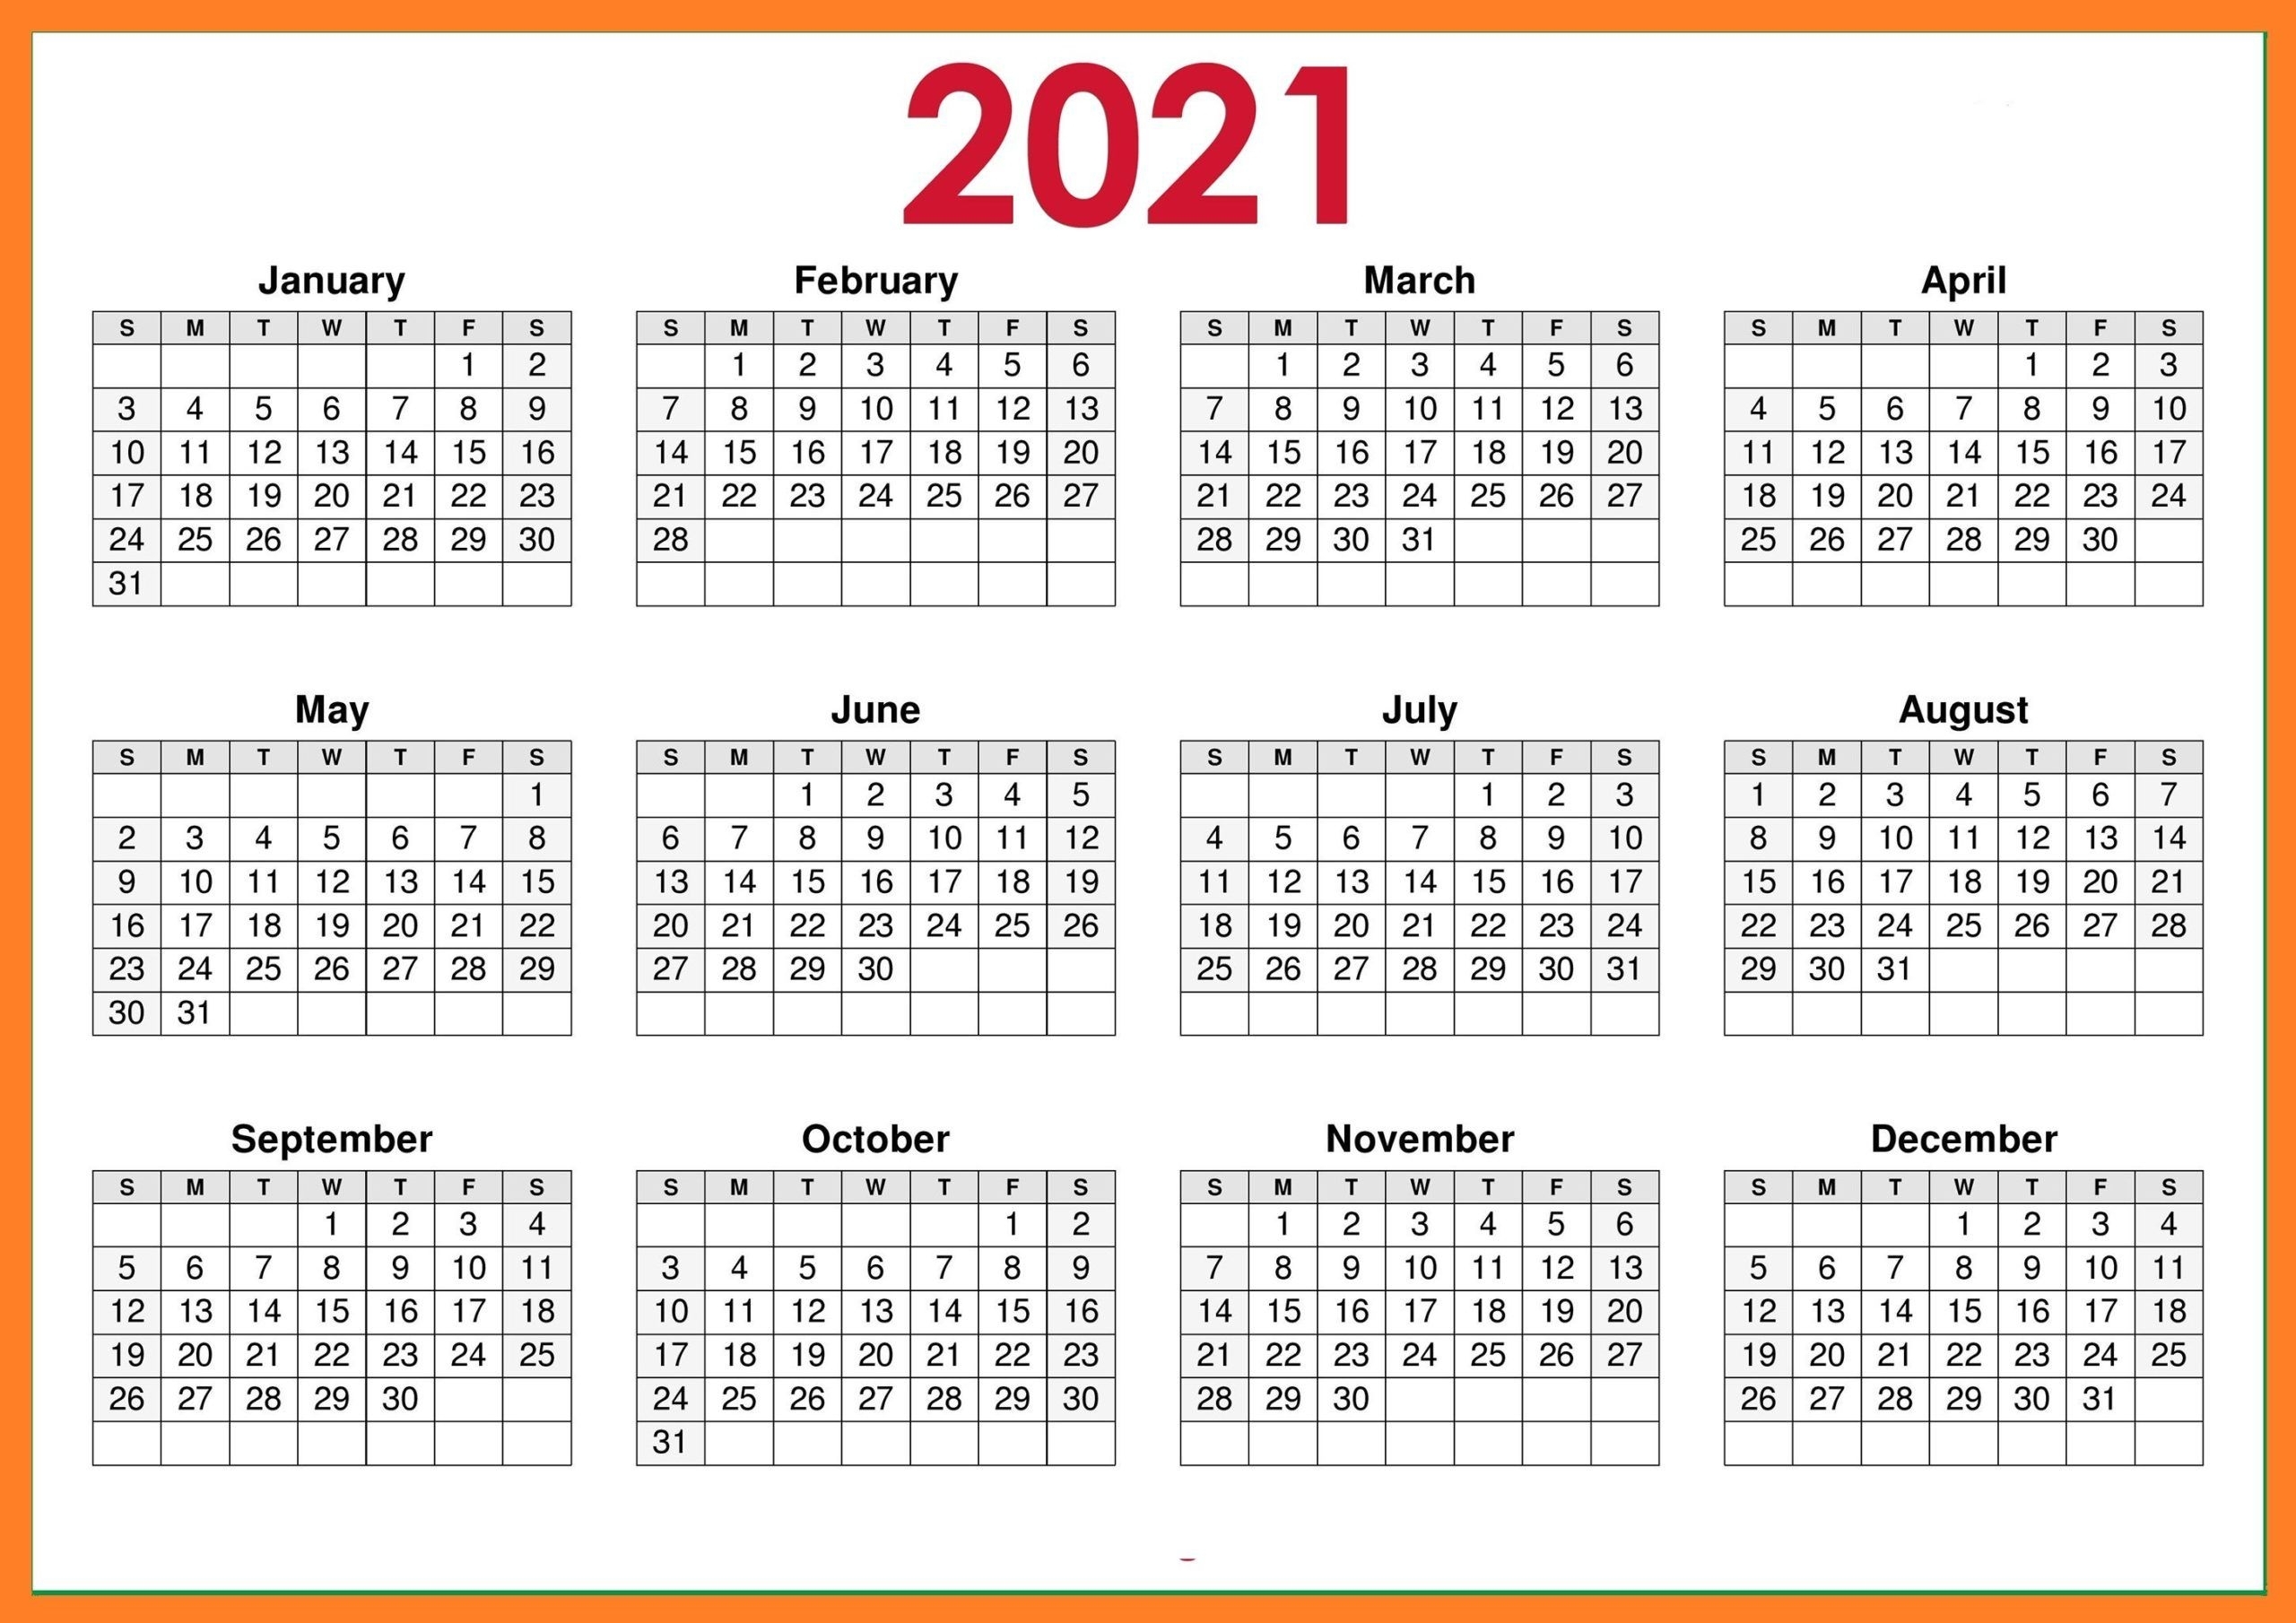 Get Falstival August 2021 Calendar